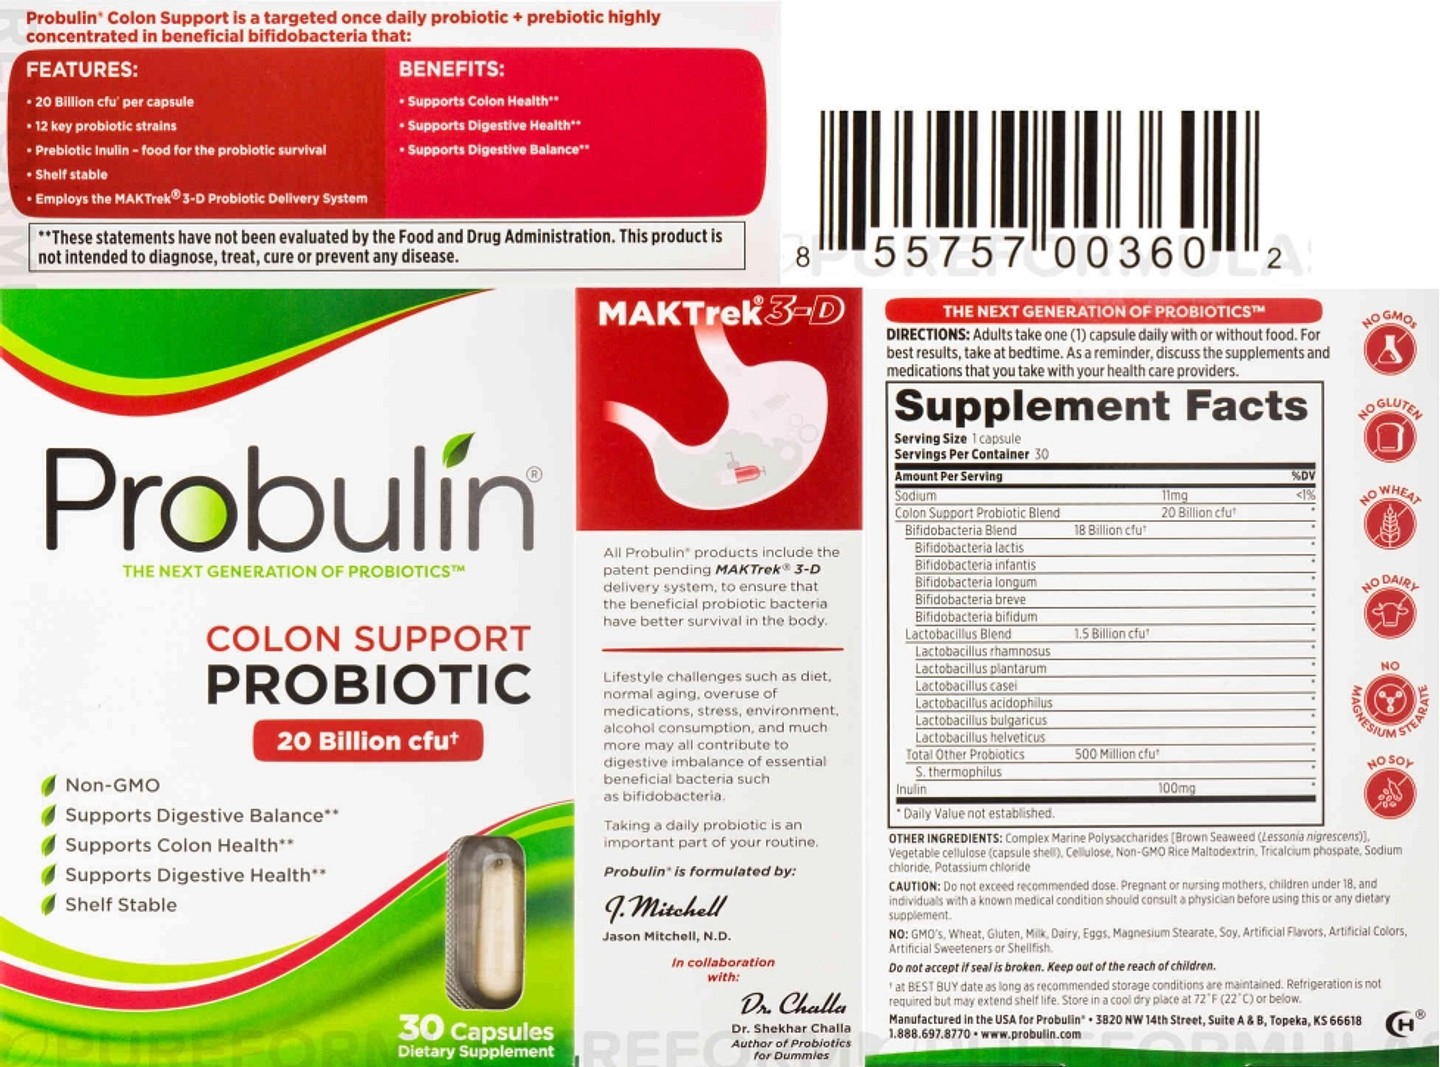 Probulin, Colon Support Probiotic label